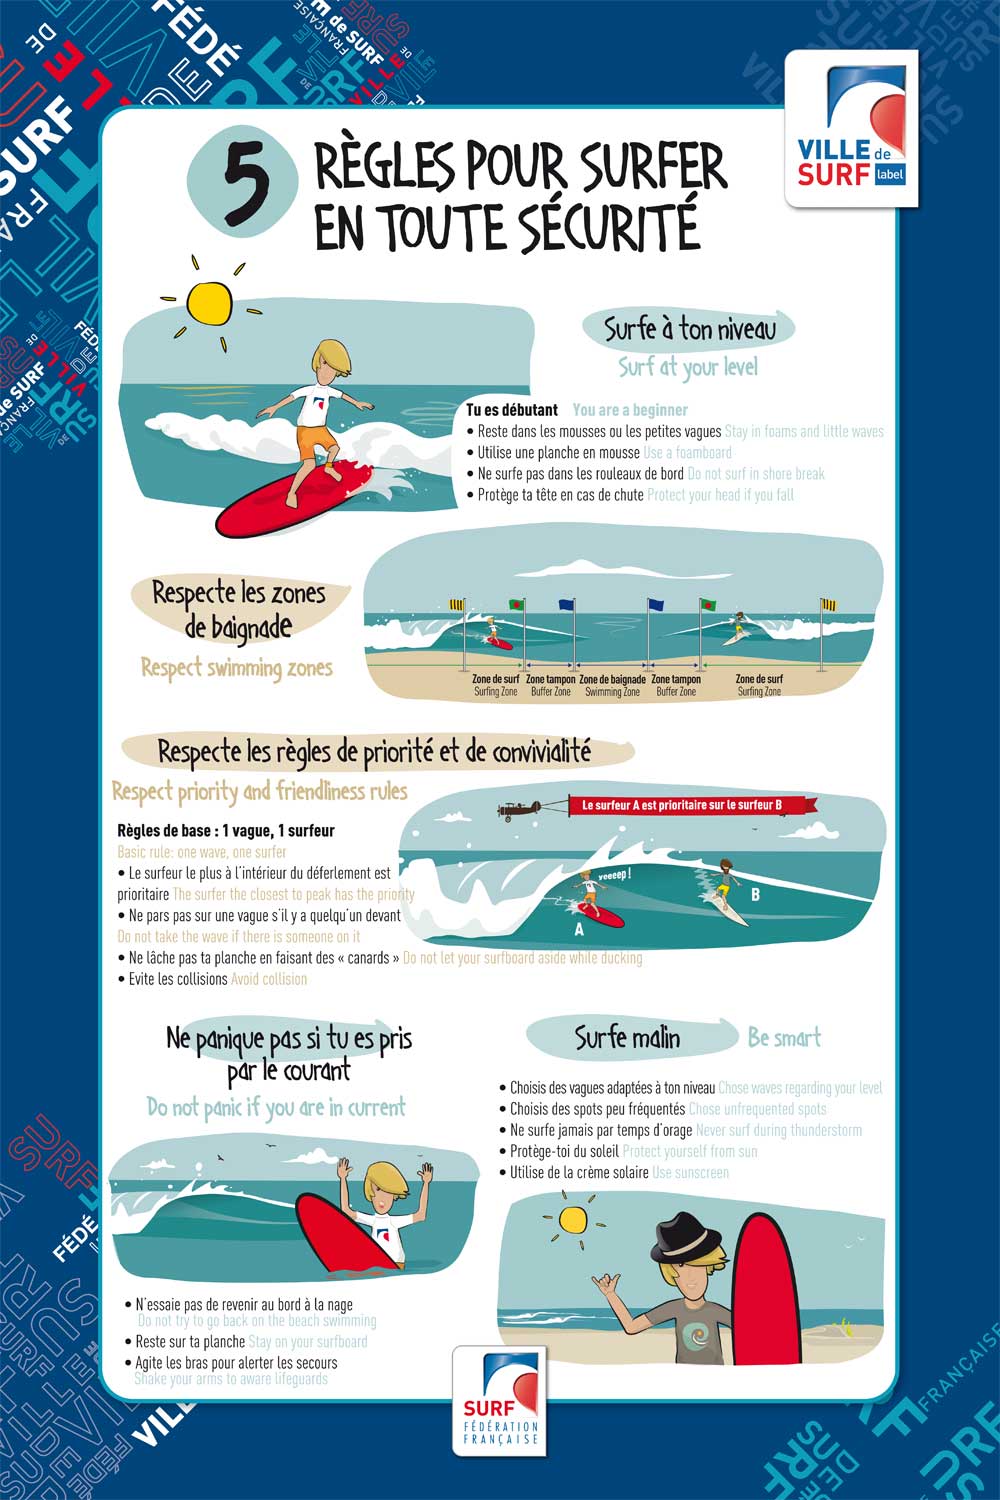 regle surfer securite seignosse | Ecole de surf seignosse